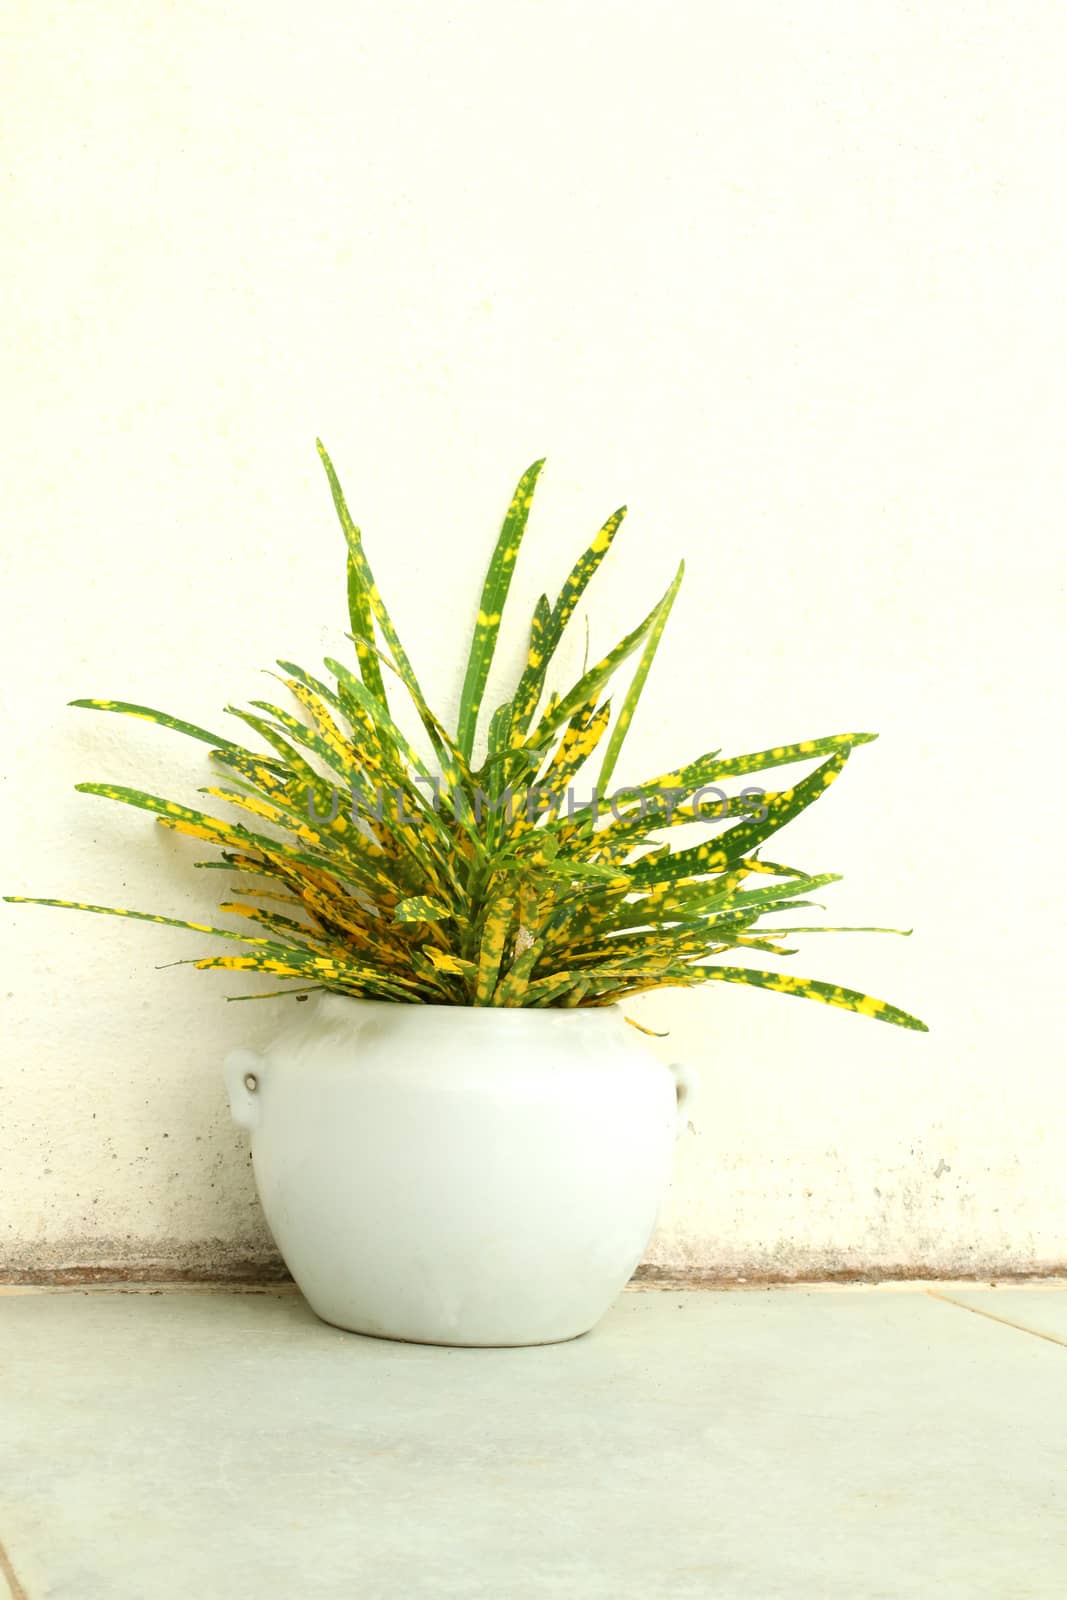 Garden Croton in the white pot by kaidevil